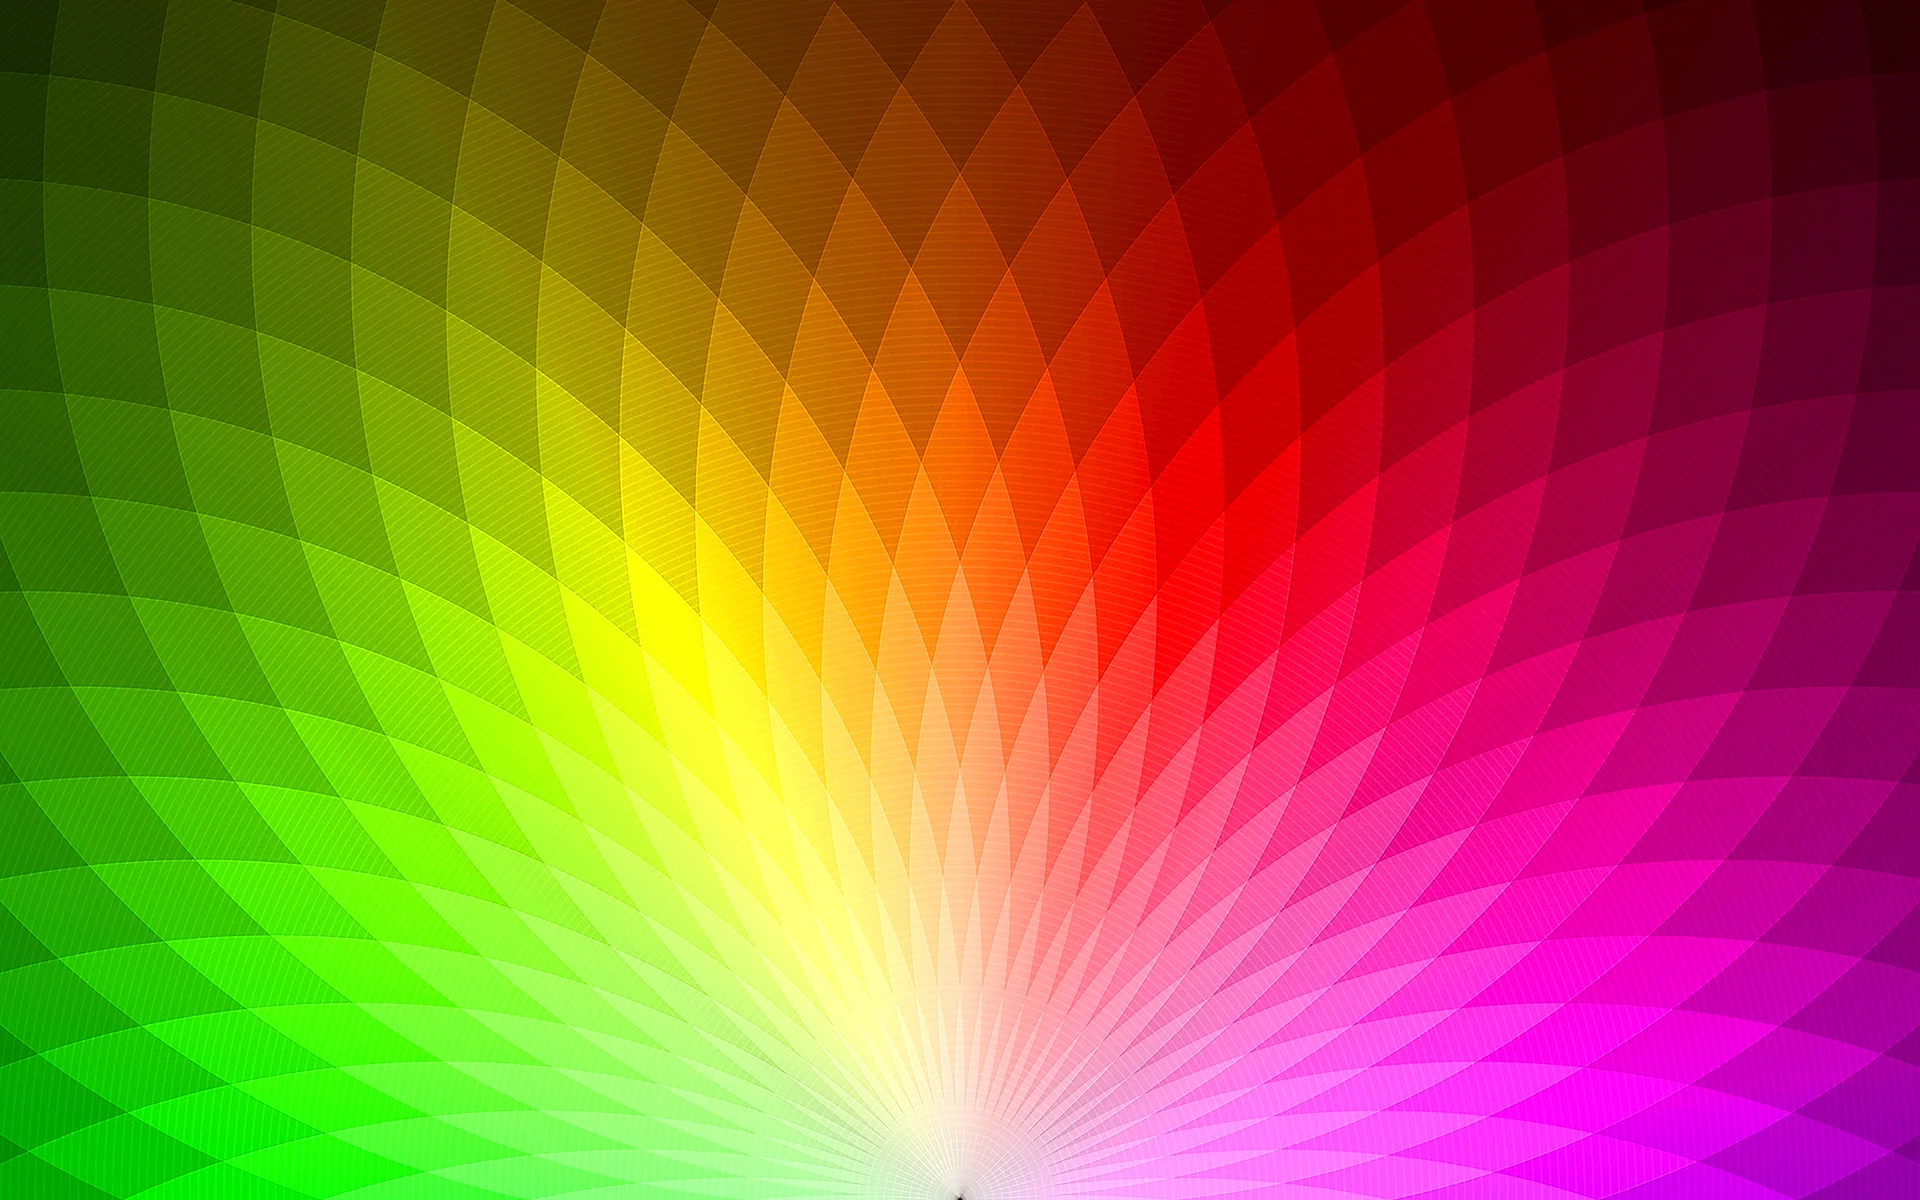 Fon Rainbow Wallpaper